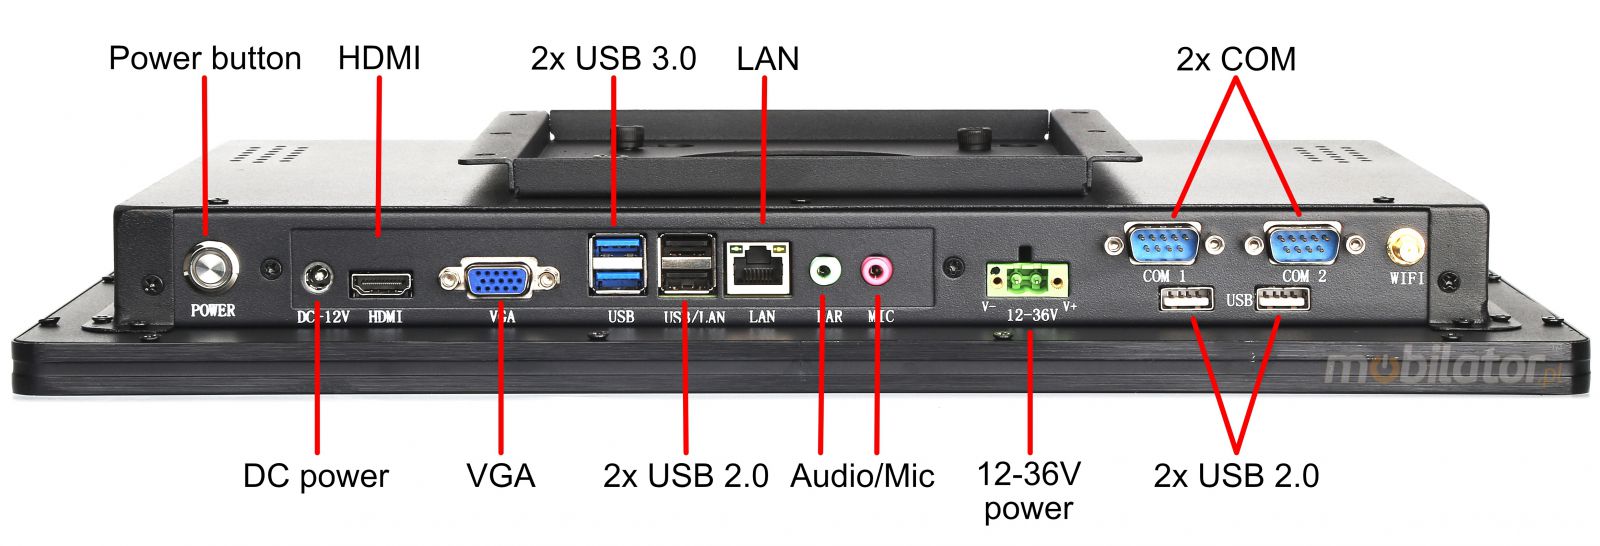 BiBOX-185PC1 (J1900) v.3 - 18.5 inch IP65, solid panel - industrial touch computer - SSD expansion, 8 GB RAM (1xLAN, 6xUSB)